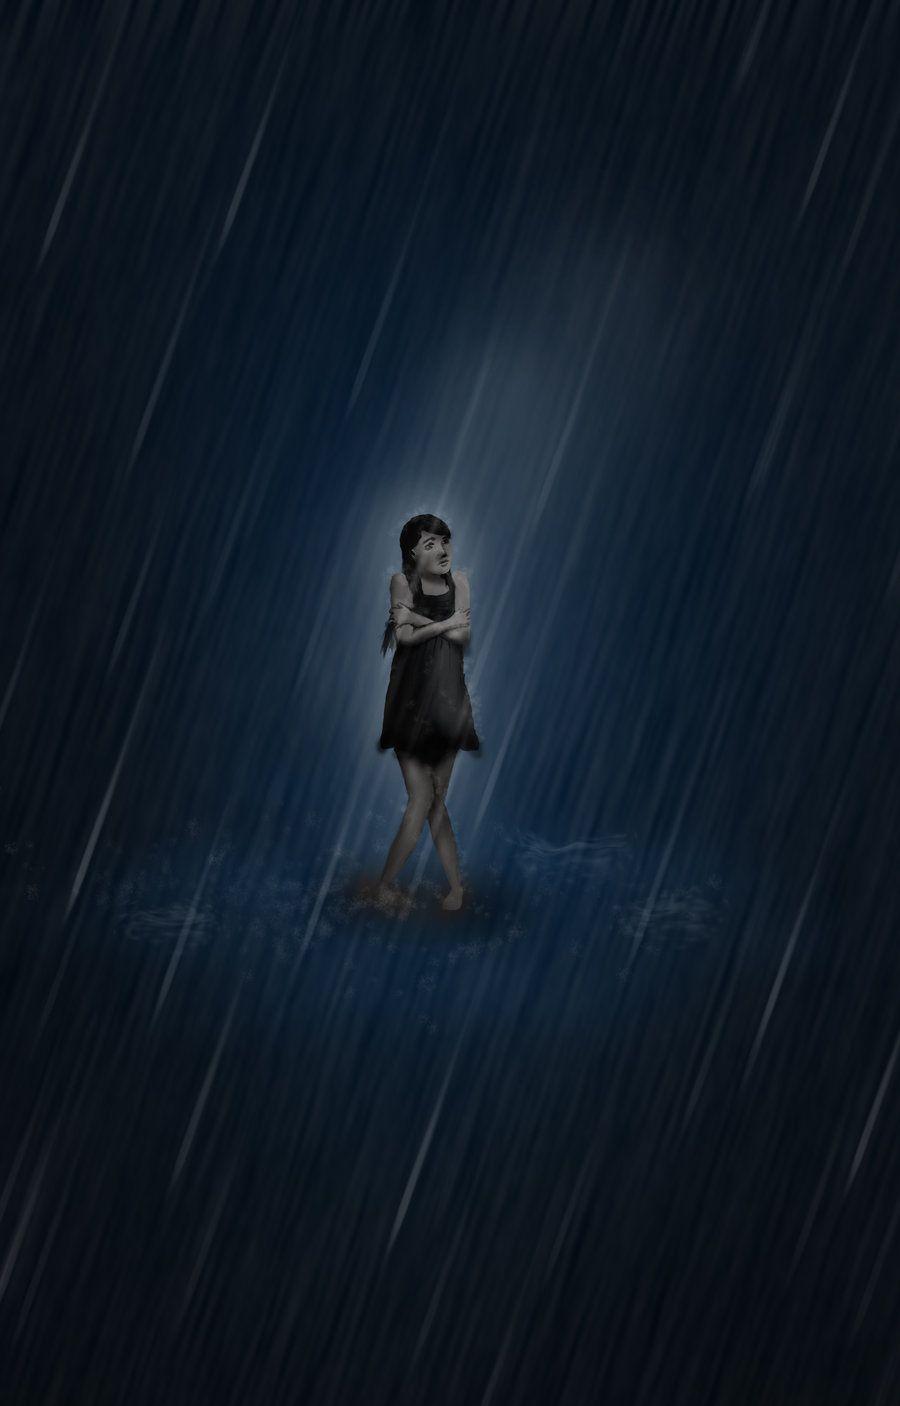 Alone In Rain Wallpapers Top Free Alone In Rain